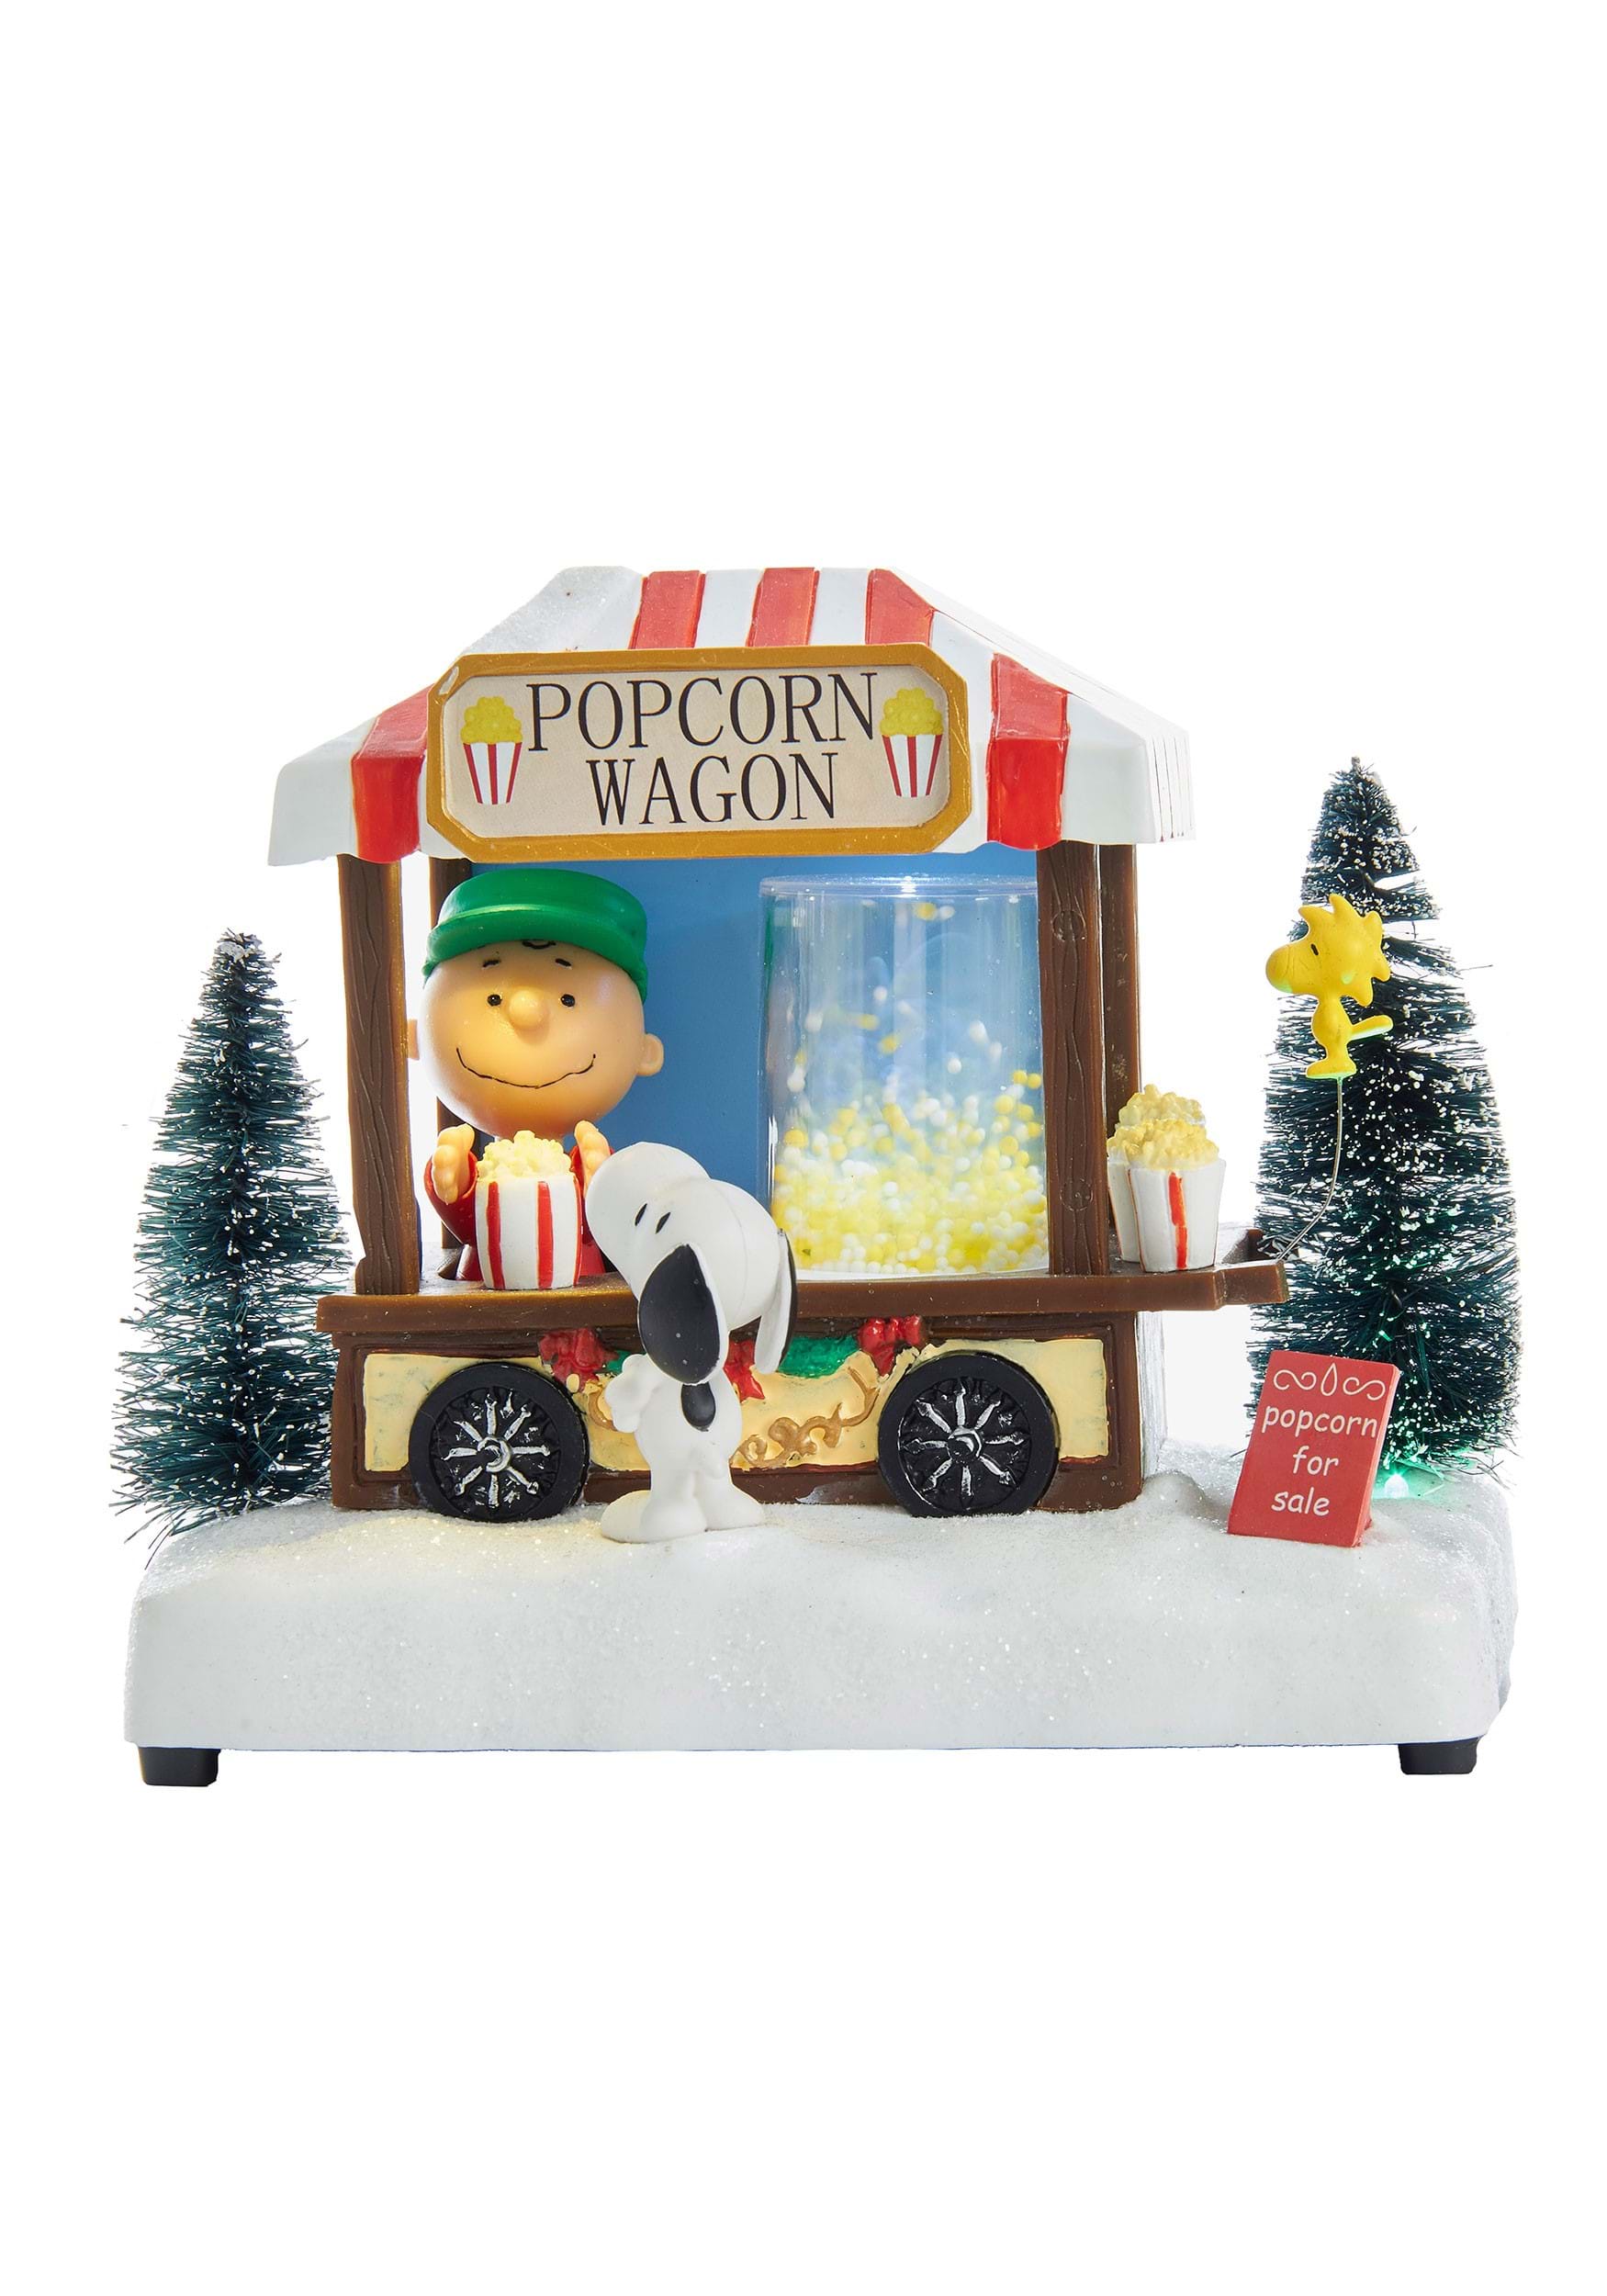 Peanuts Musical LED Light Up Popcorn Wagon Tablepiece Figure From Kurt Adler